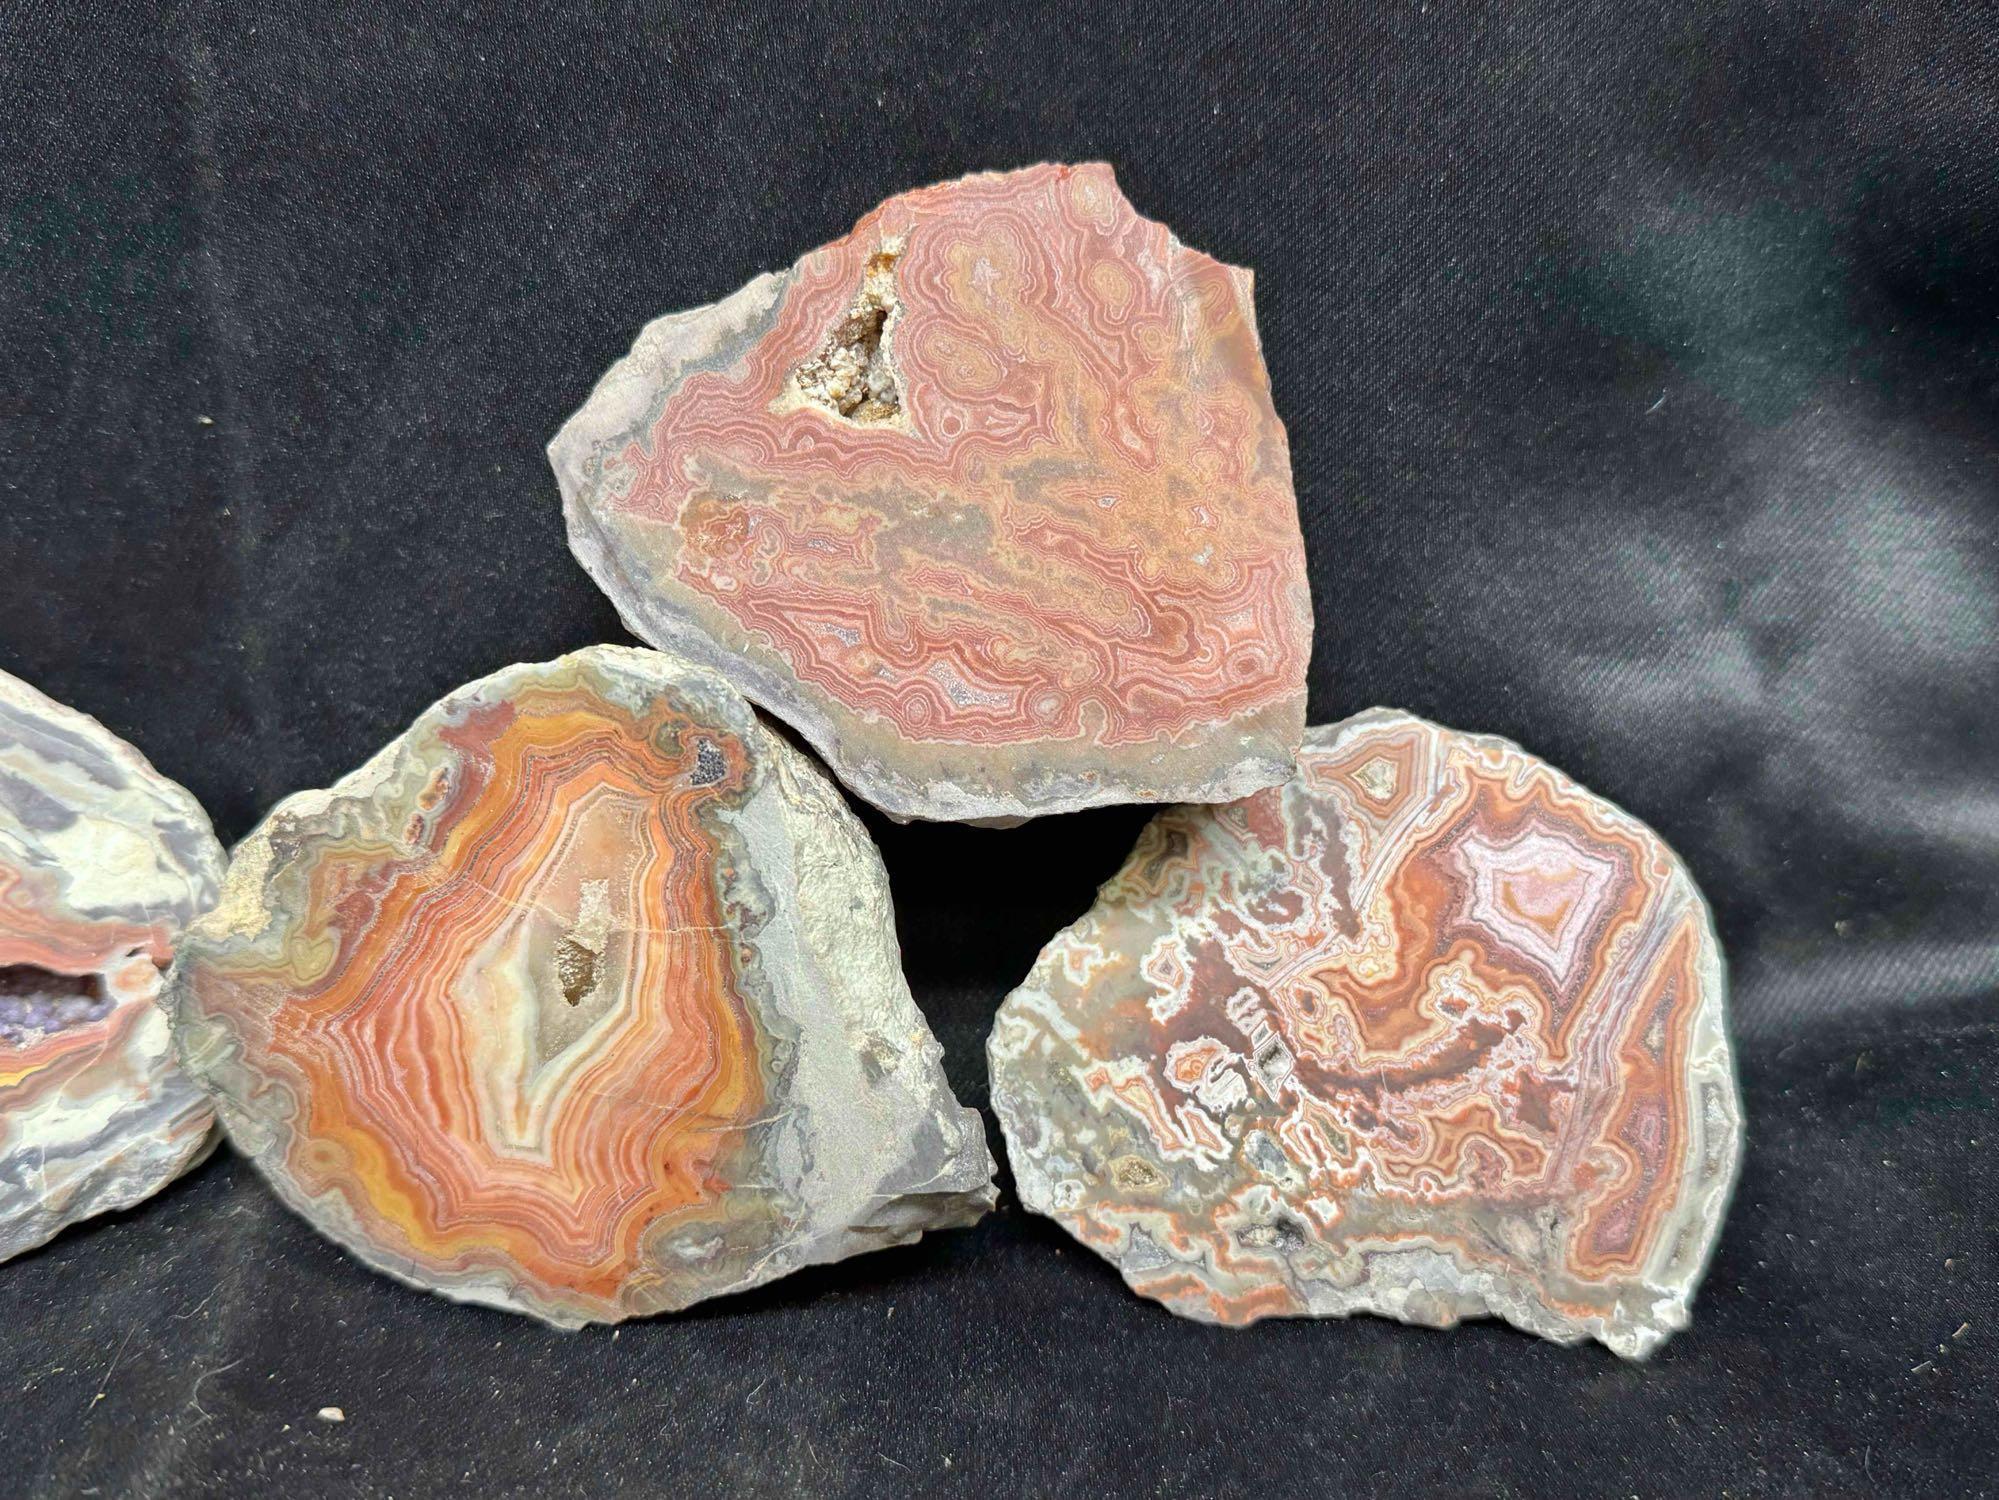 6 Reddish Geode Halves Specimens